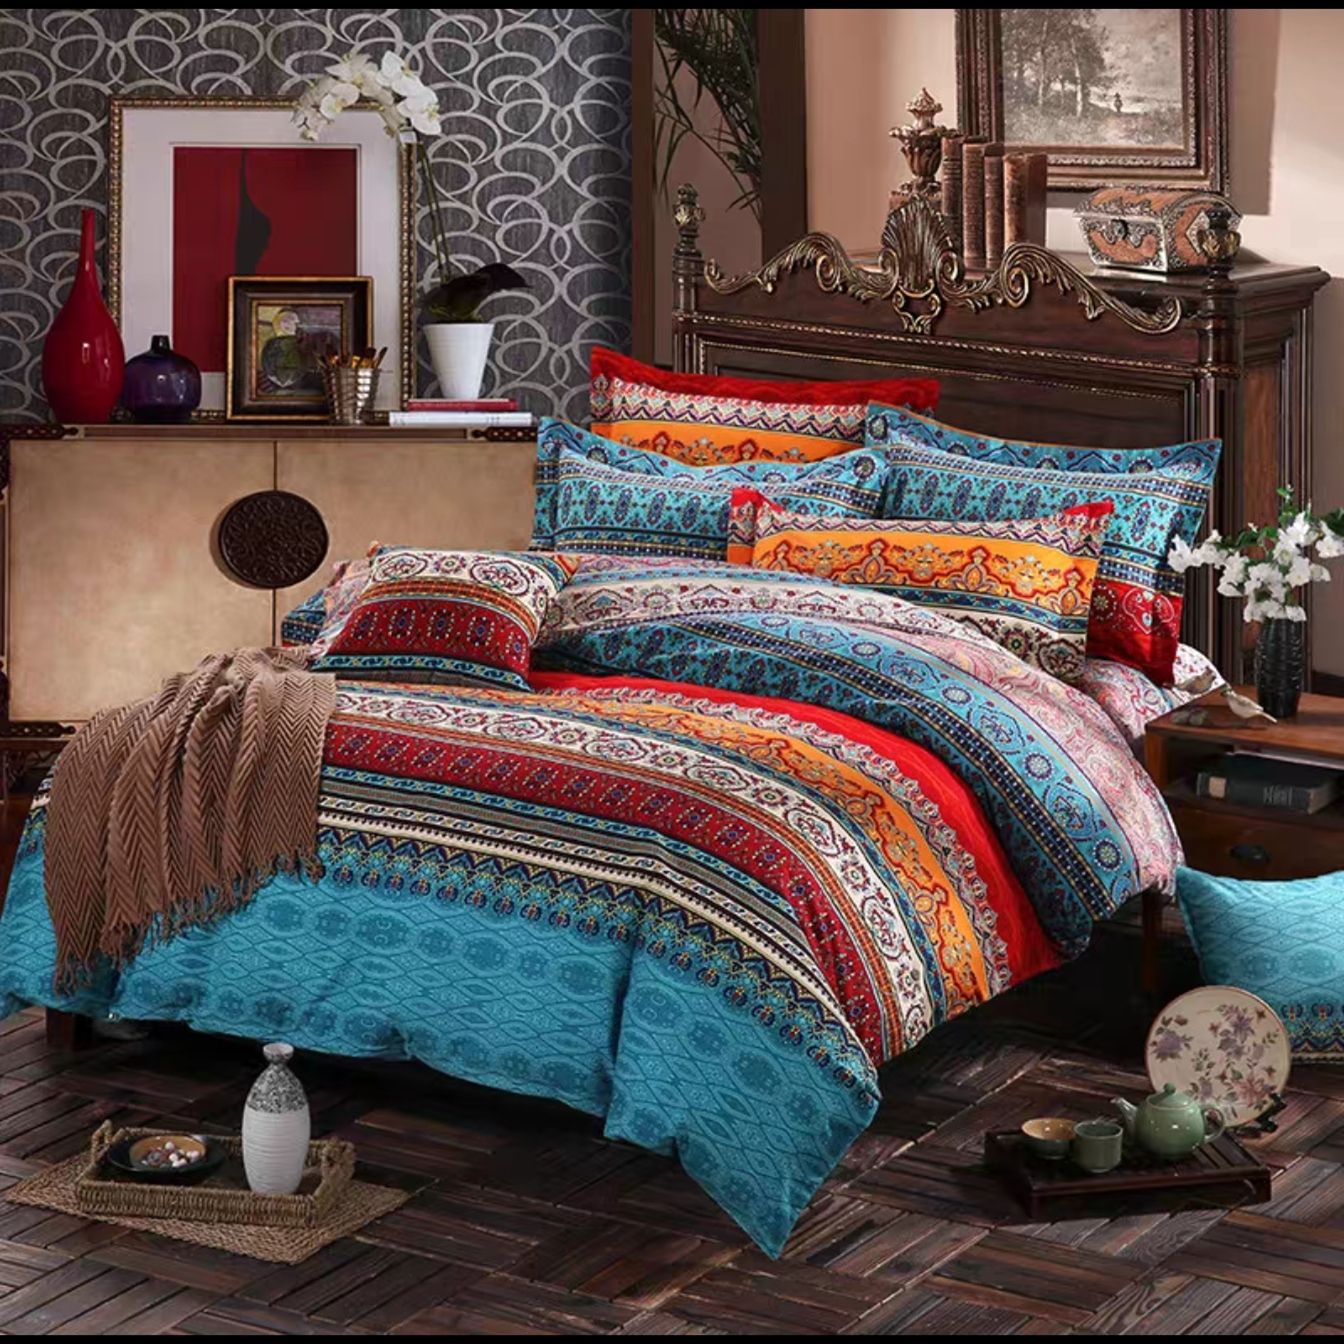 3 Piece Boho Bedding Set 1 Bohemian Design Duvet Cover & 2 Pillow Cases